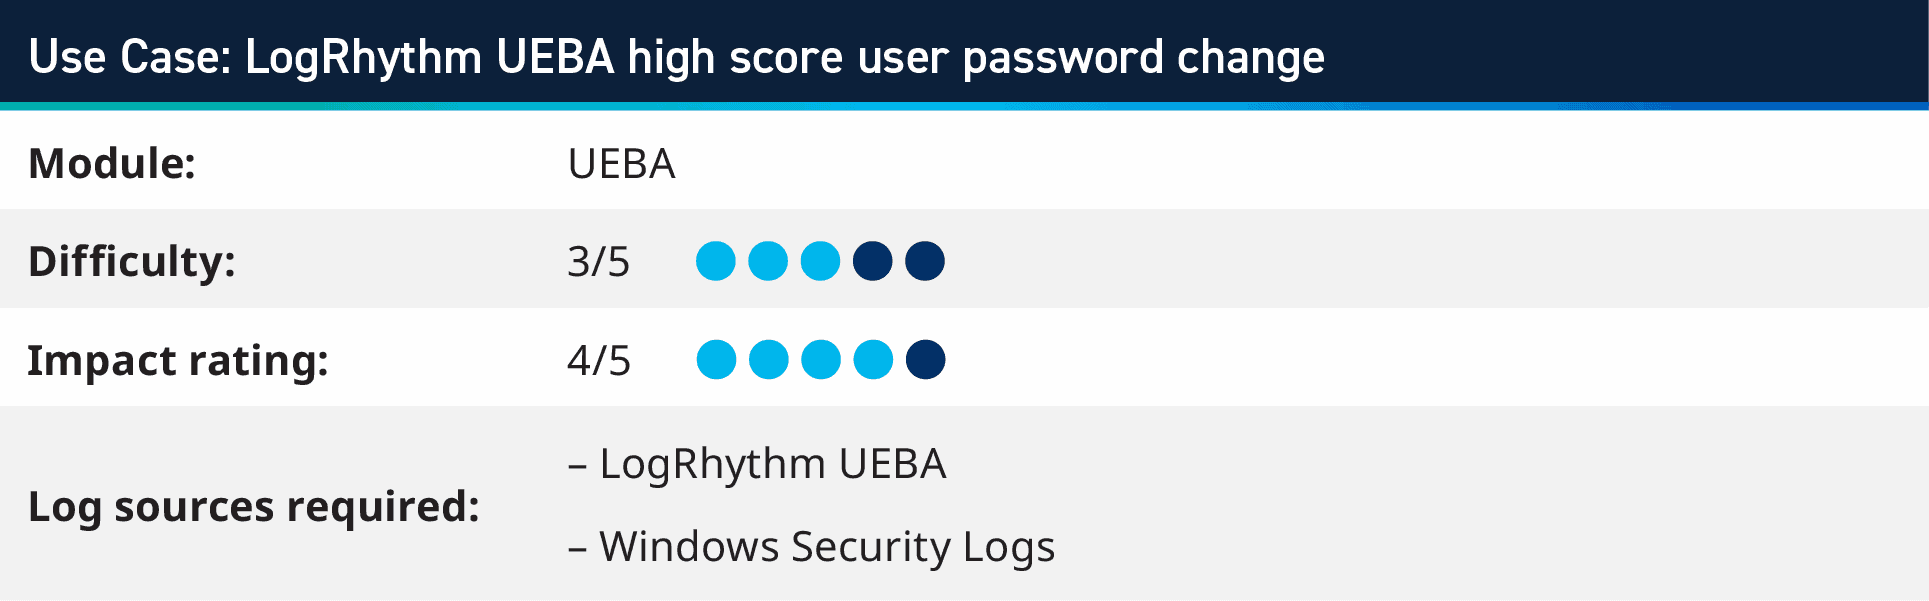 LogRhythm UEBA high score user password change use case